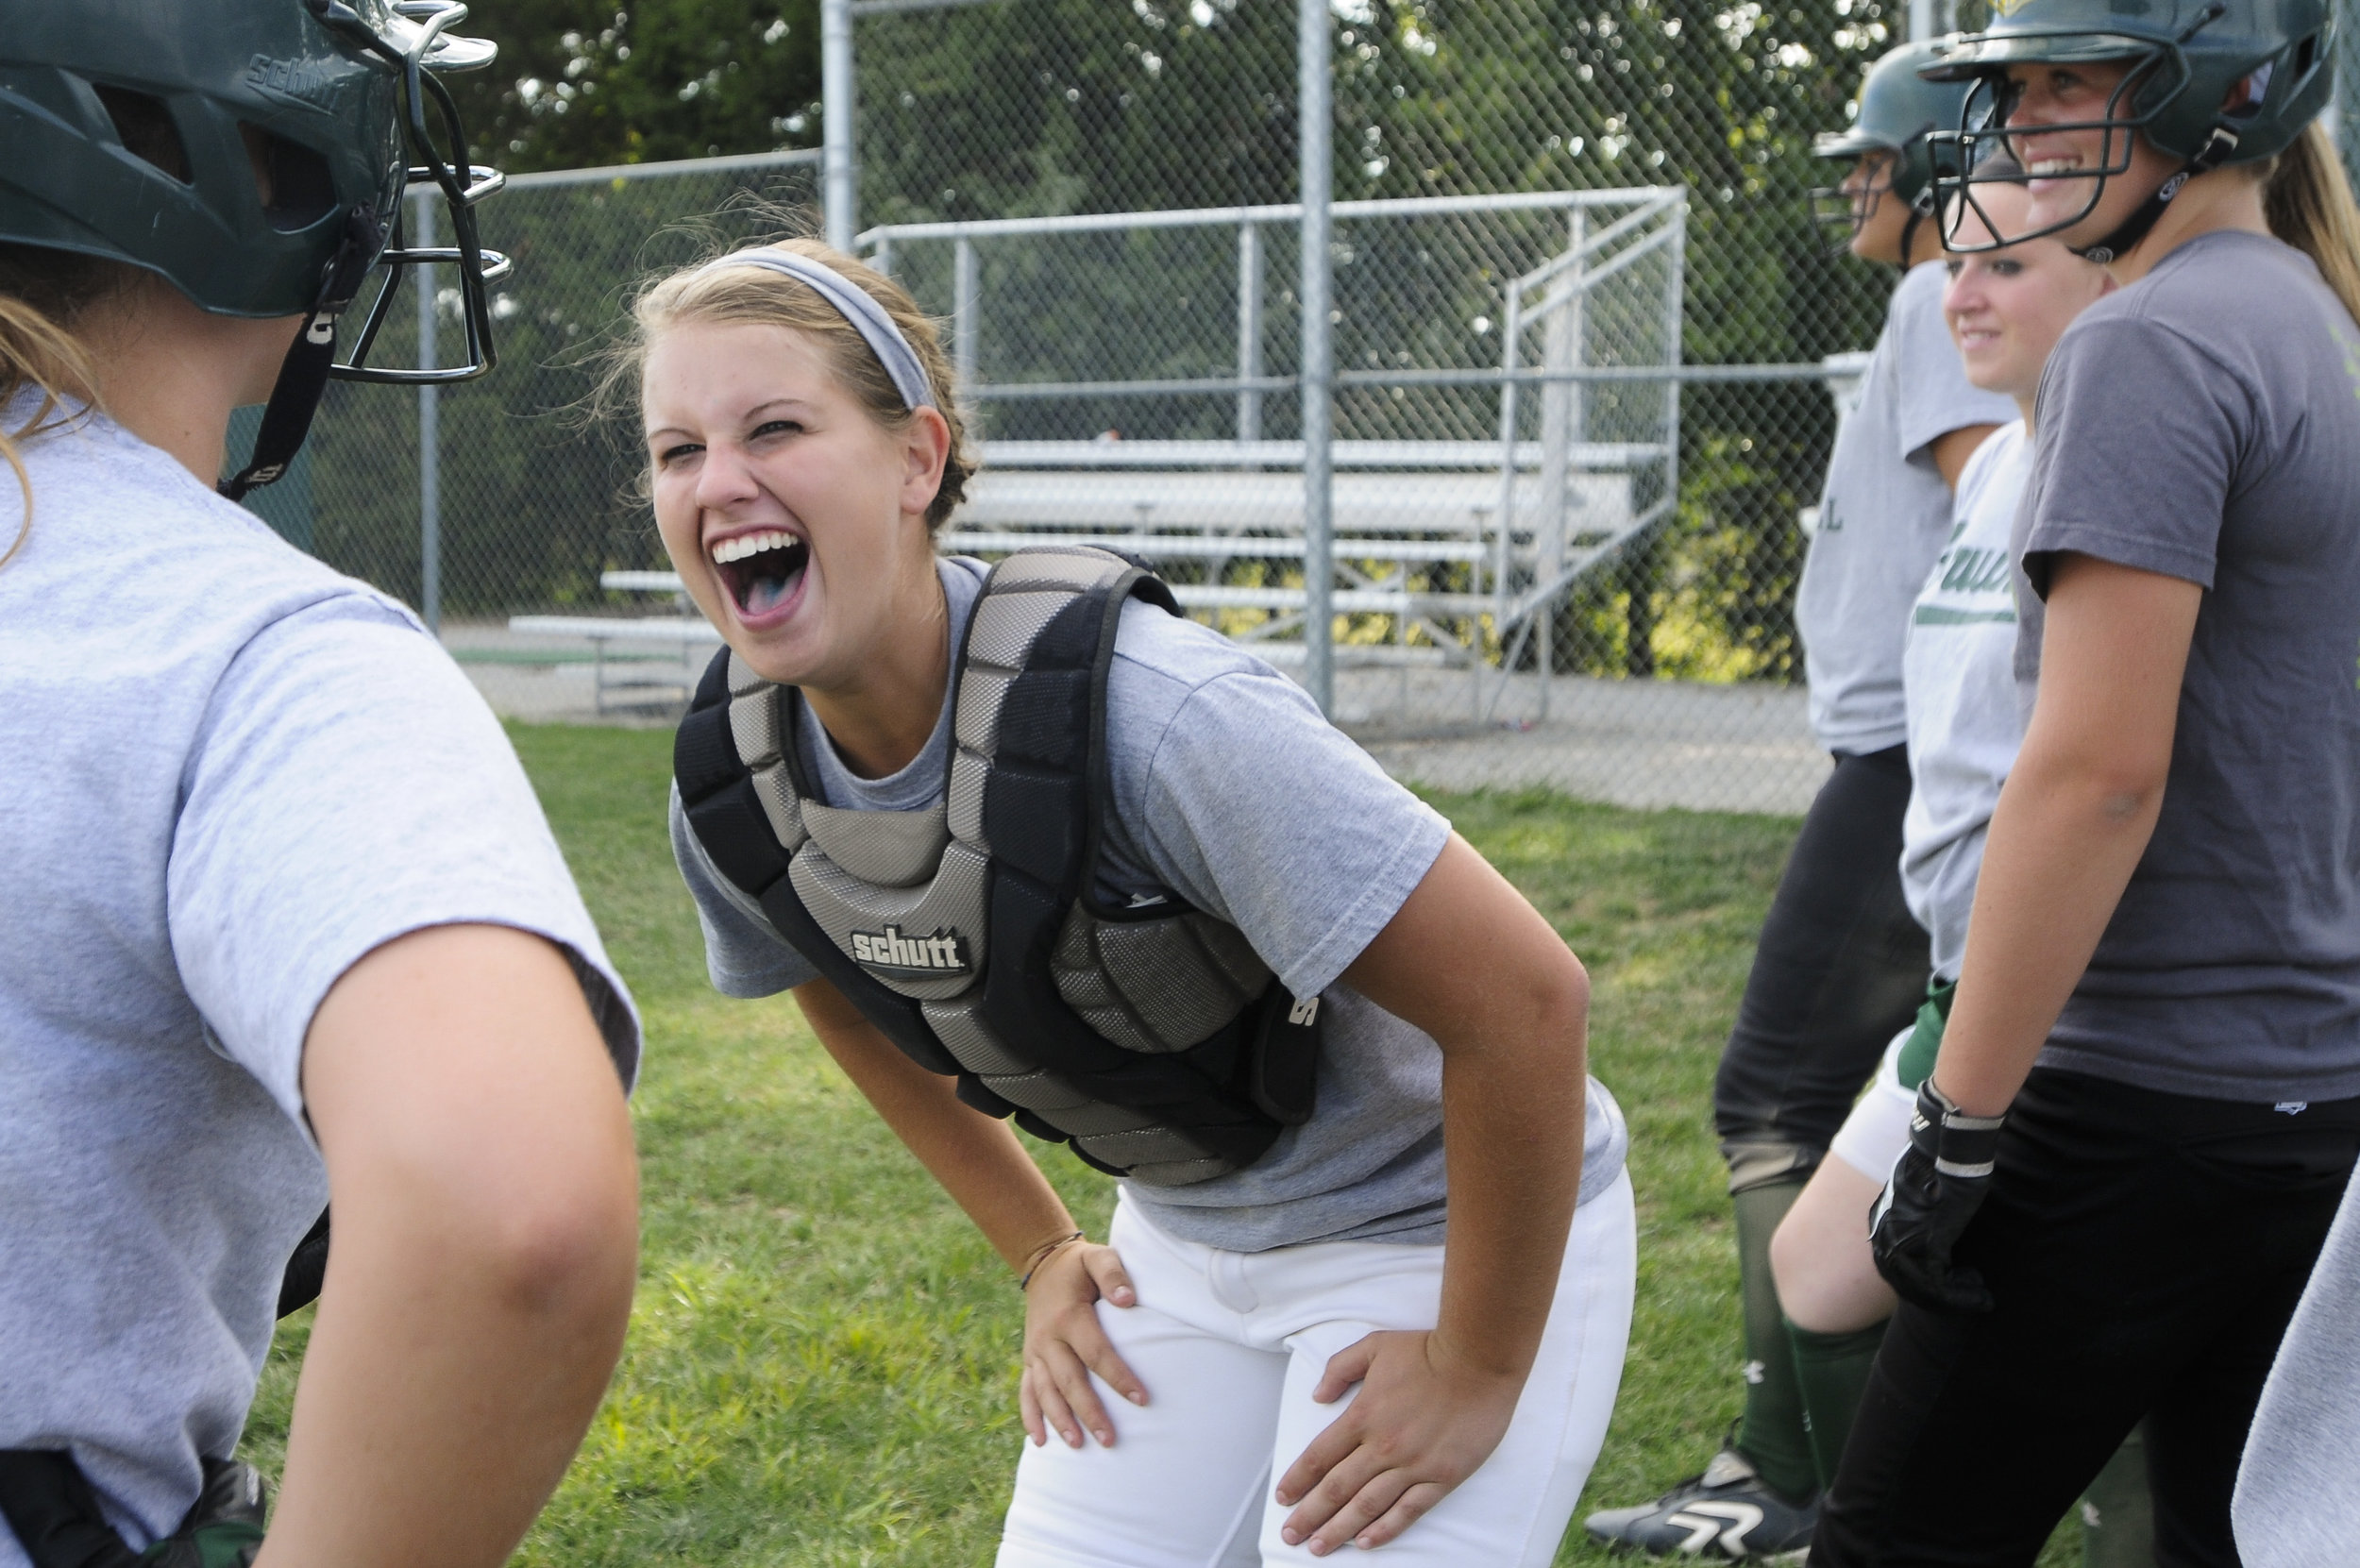  Rock Bridge softball player Samantha Bell&nbsp;jokes with her teammates in Columbia, MO. 